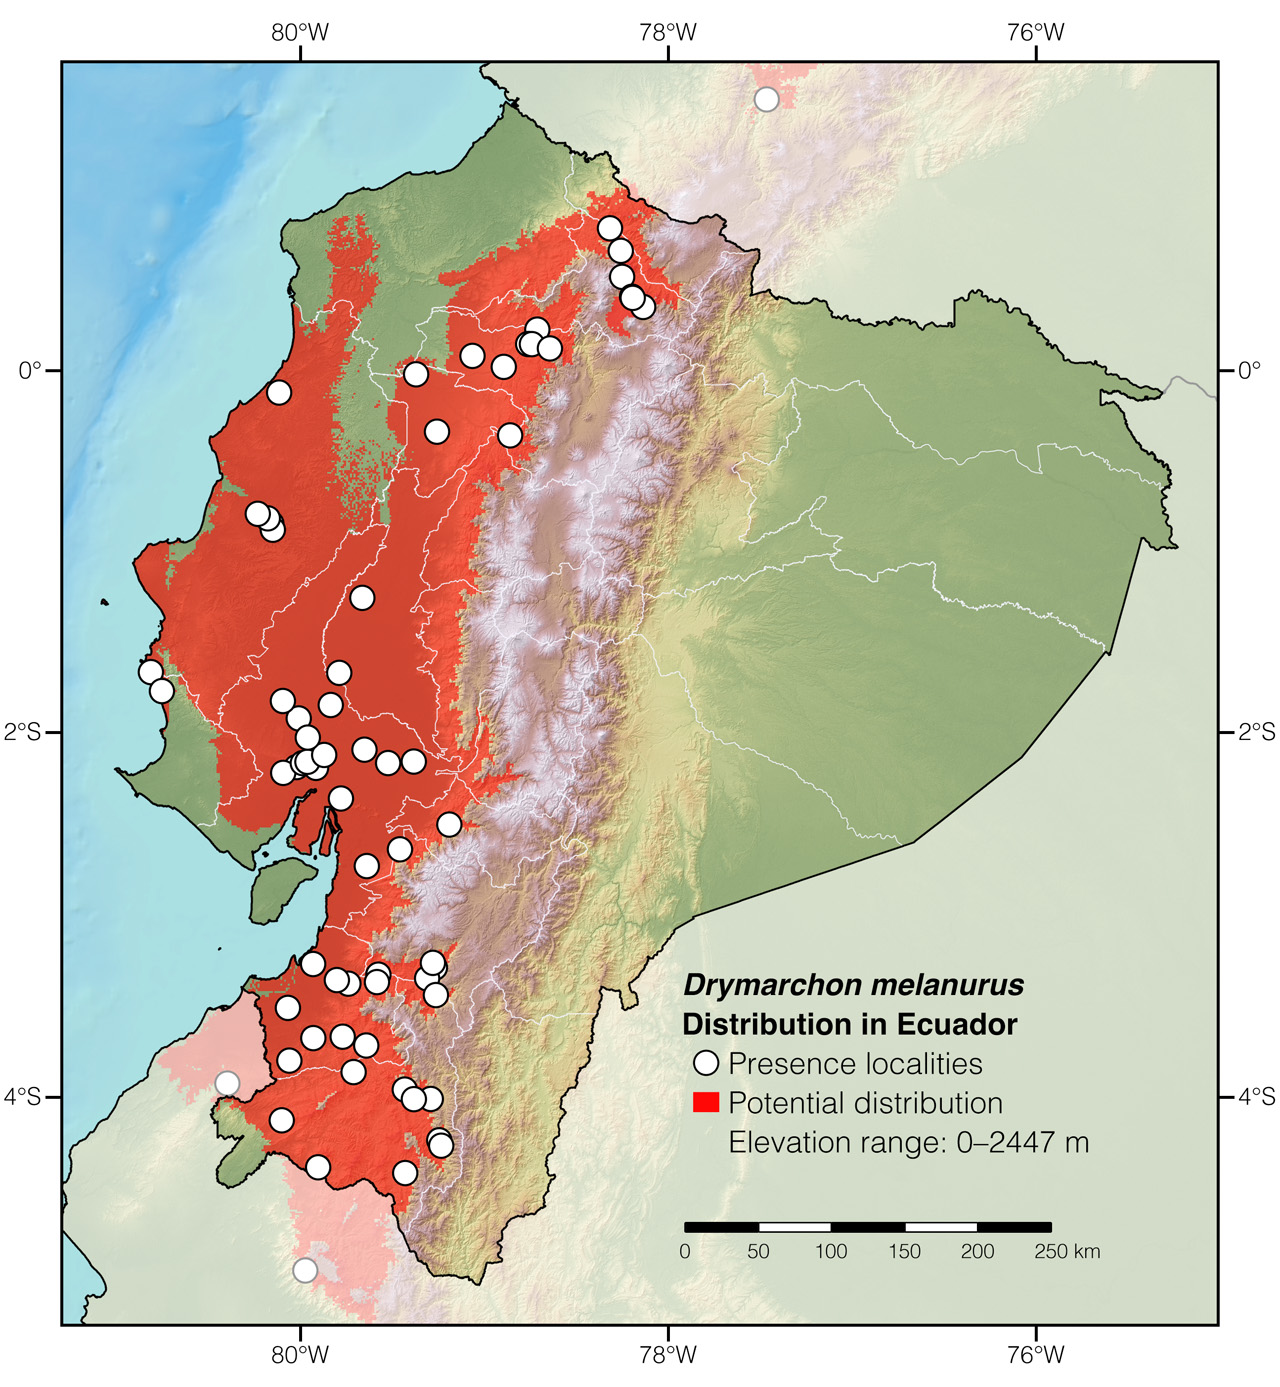 Distribution of Drymarchon melanurus in Ecuador